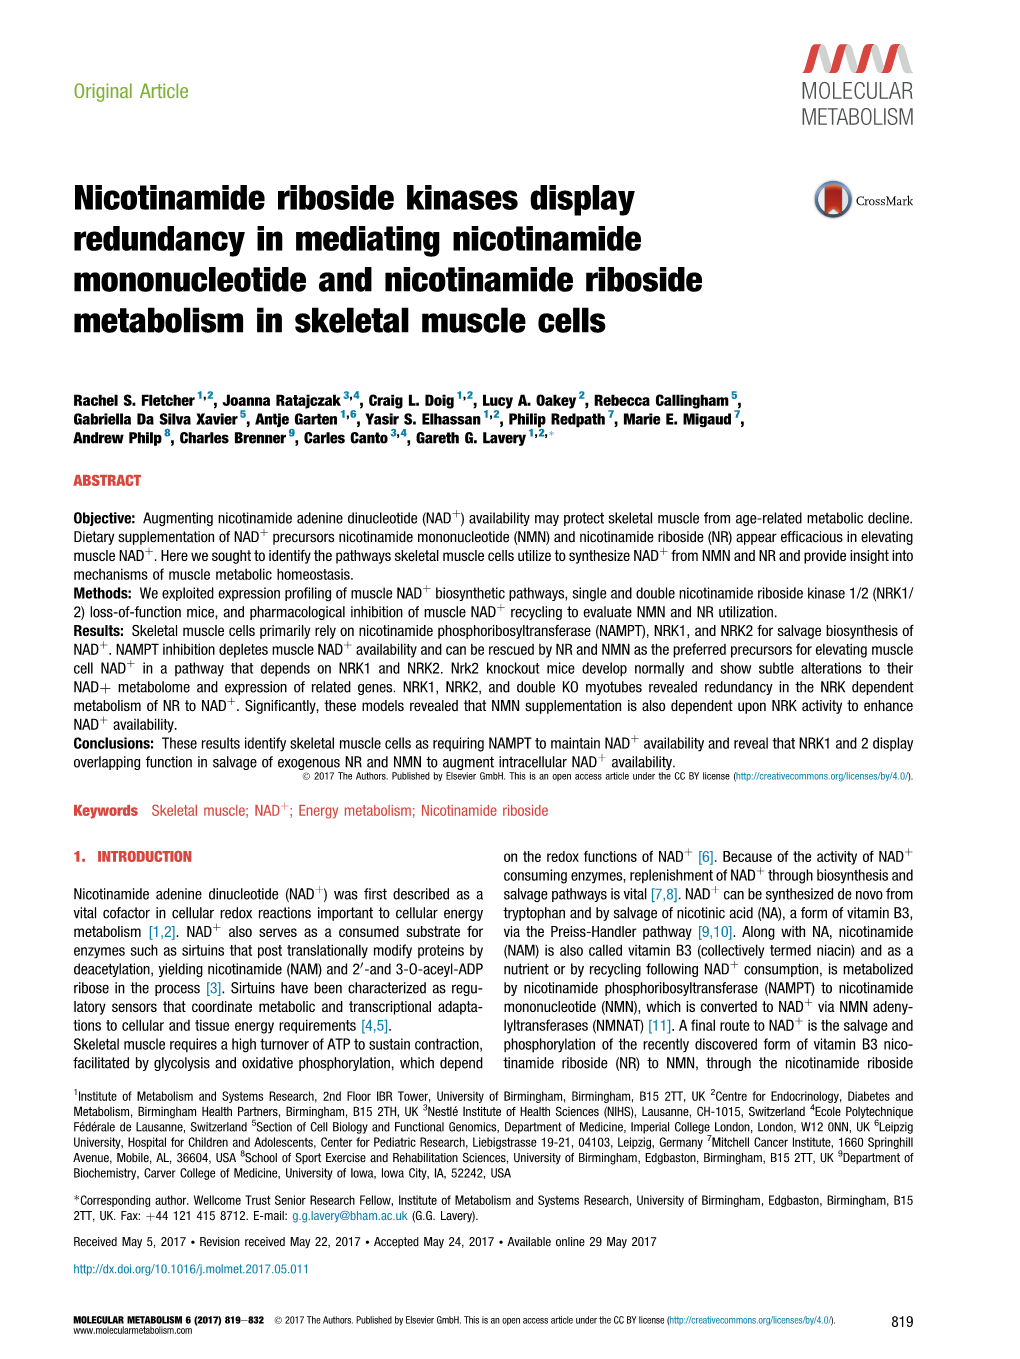 Nicotinamide Riboside Kinases Display Redundancy in Mediating Nicotinamide Mononucleotide and Nicotinamide Riboside Metabolism in Skeletal Muscle Cells